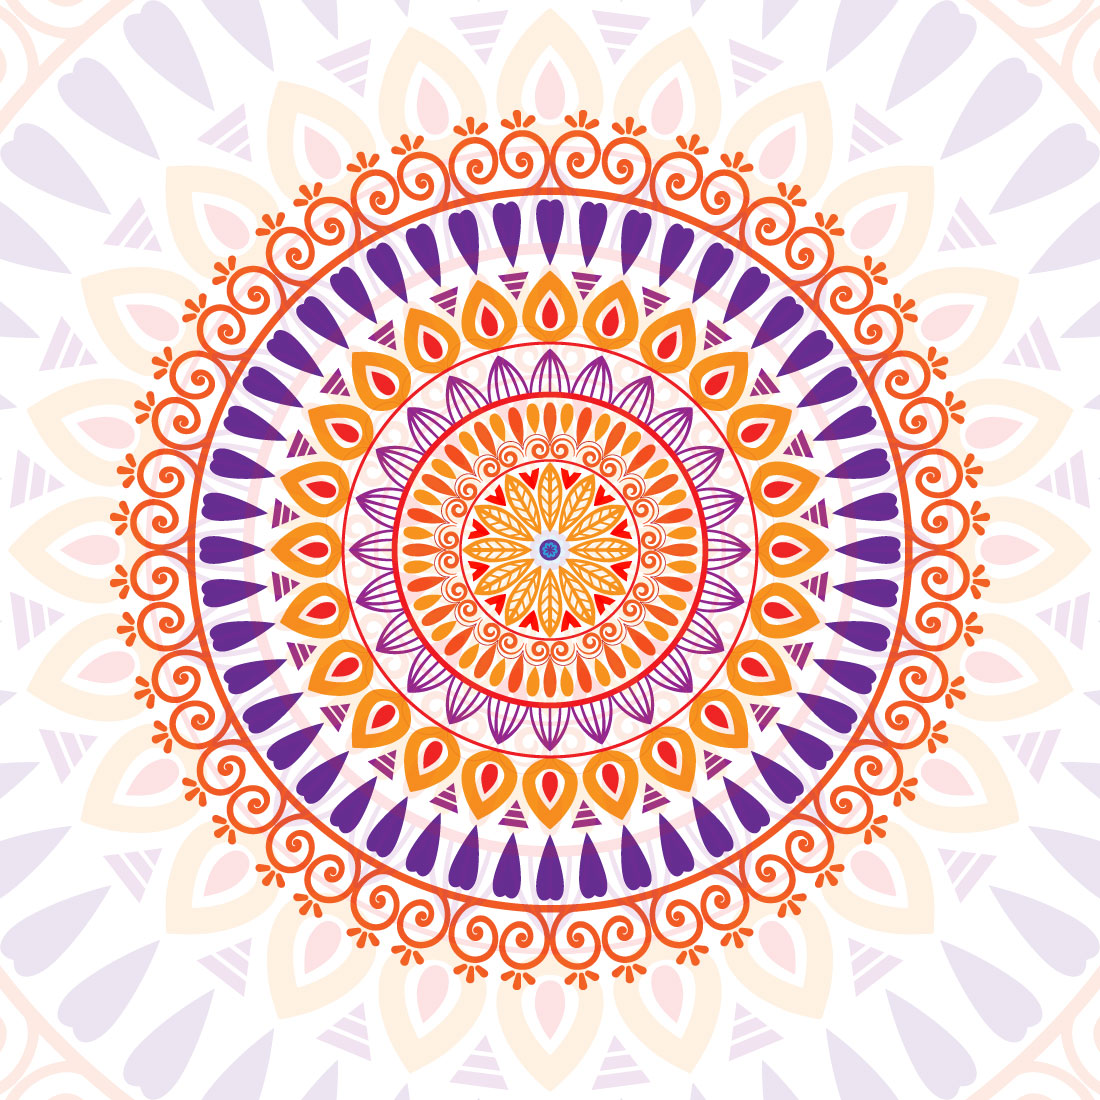 Luxury Mandala Vector Design Template cover image.